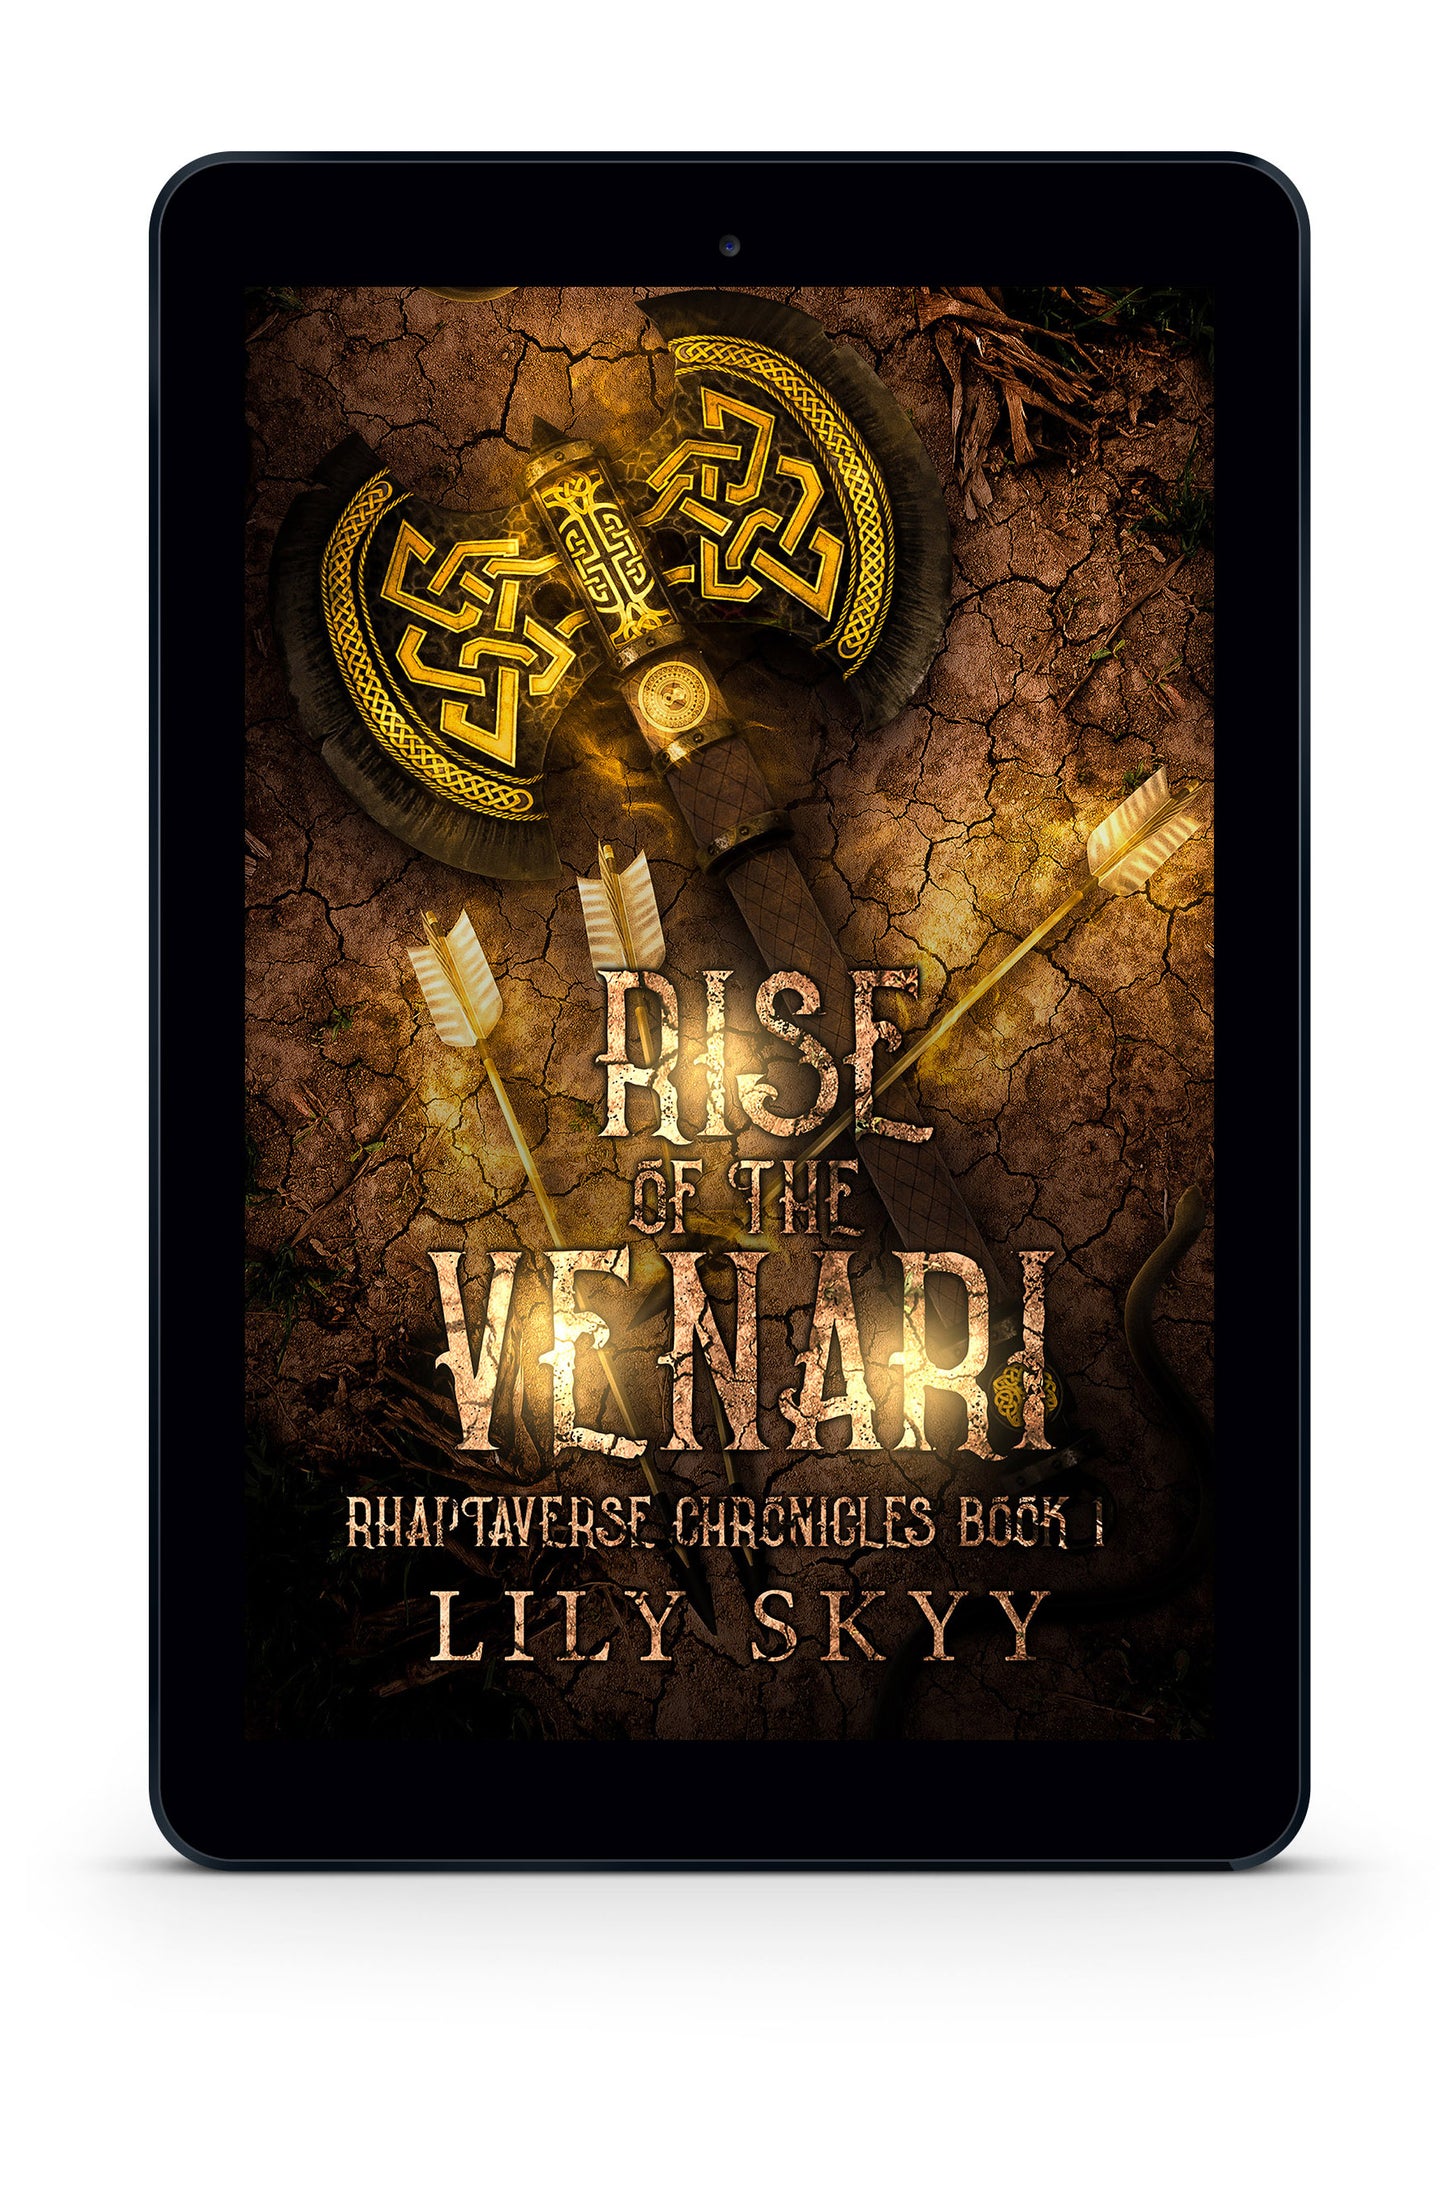 Rise of the Venari: The Rhaptaverse Chronicles Book 1 (ebook) *PREORDER*